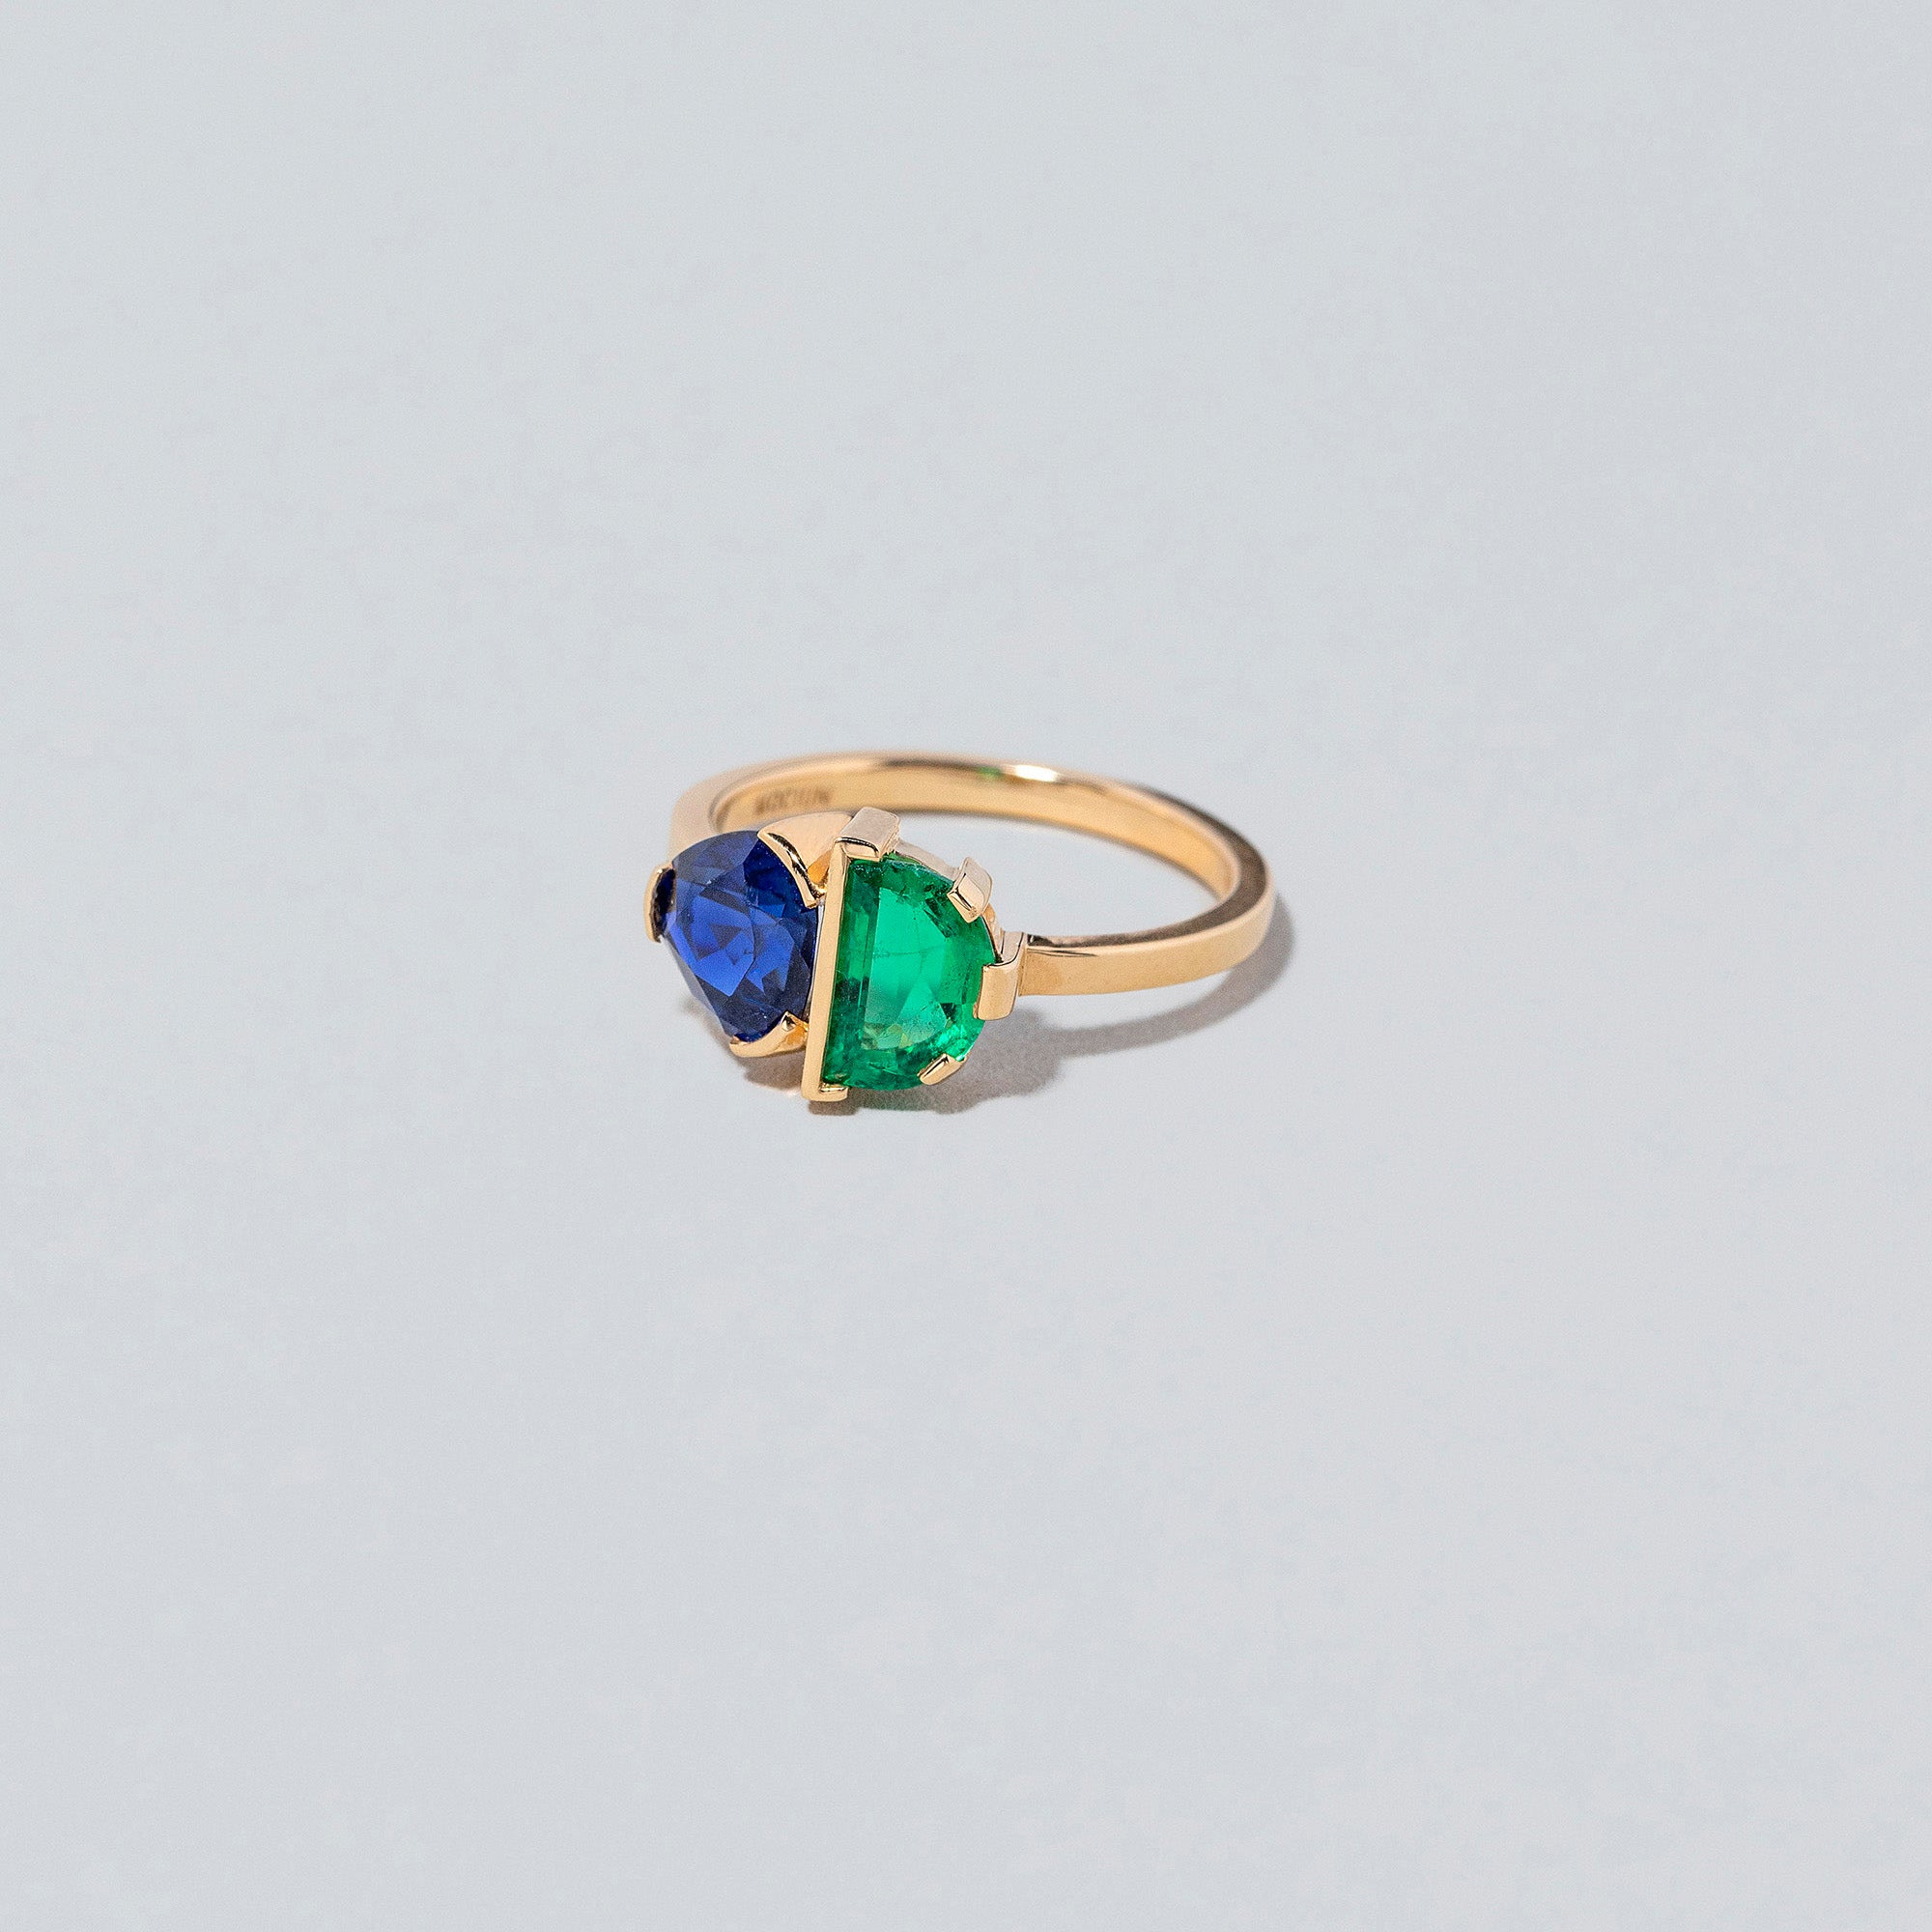 product_details:: Montserrat Ring on light color background.